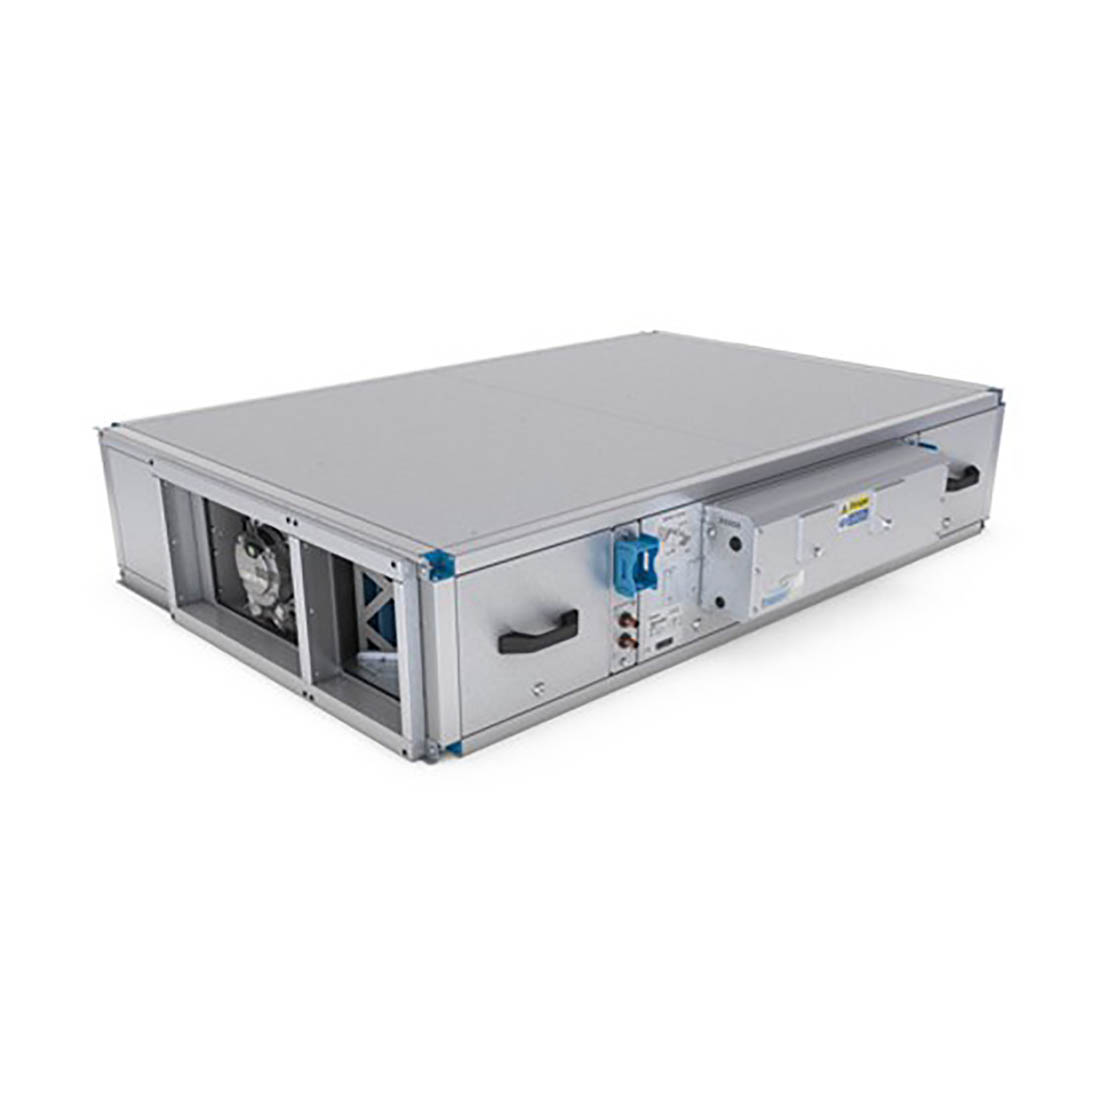 Nuaire Xboxer XBC-25 Commercial Heat Exchange Unit - (Price Varies Upon Appraisal)